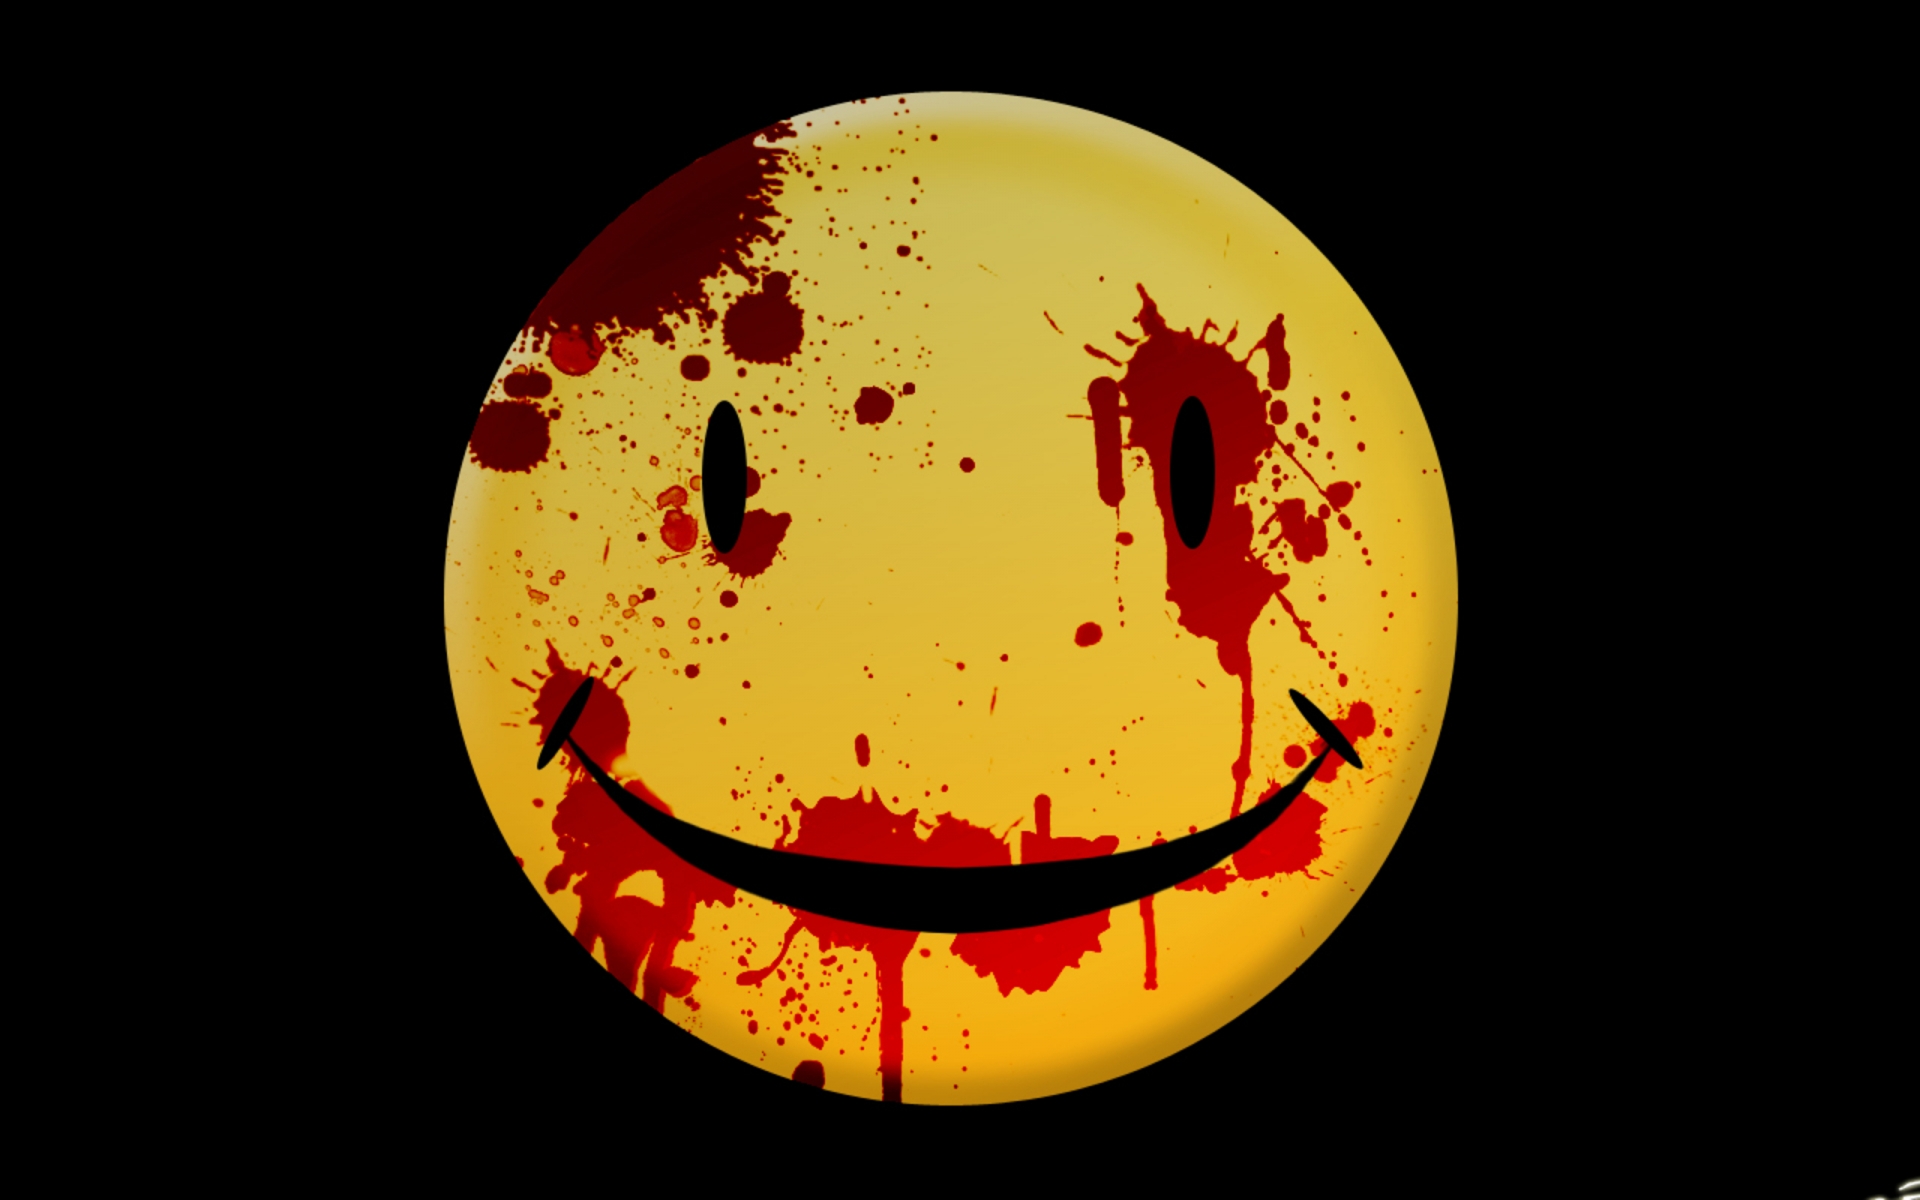 smiley face dark horror mood blood wallpaper background 1920x1200